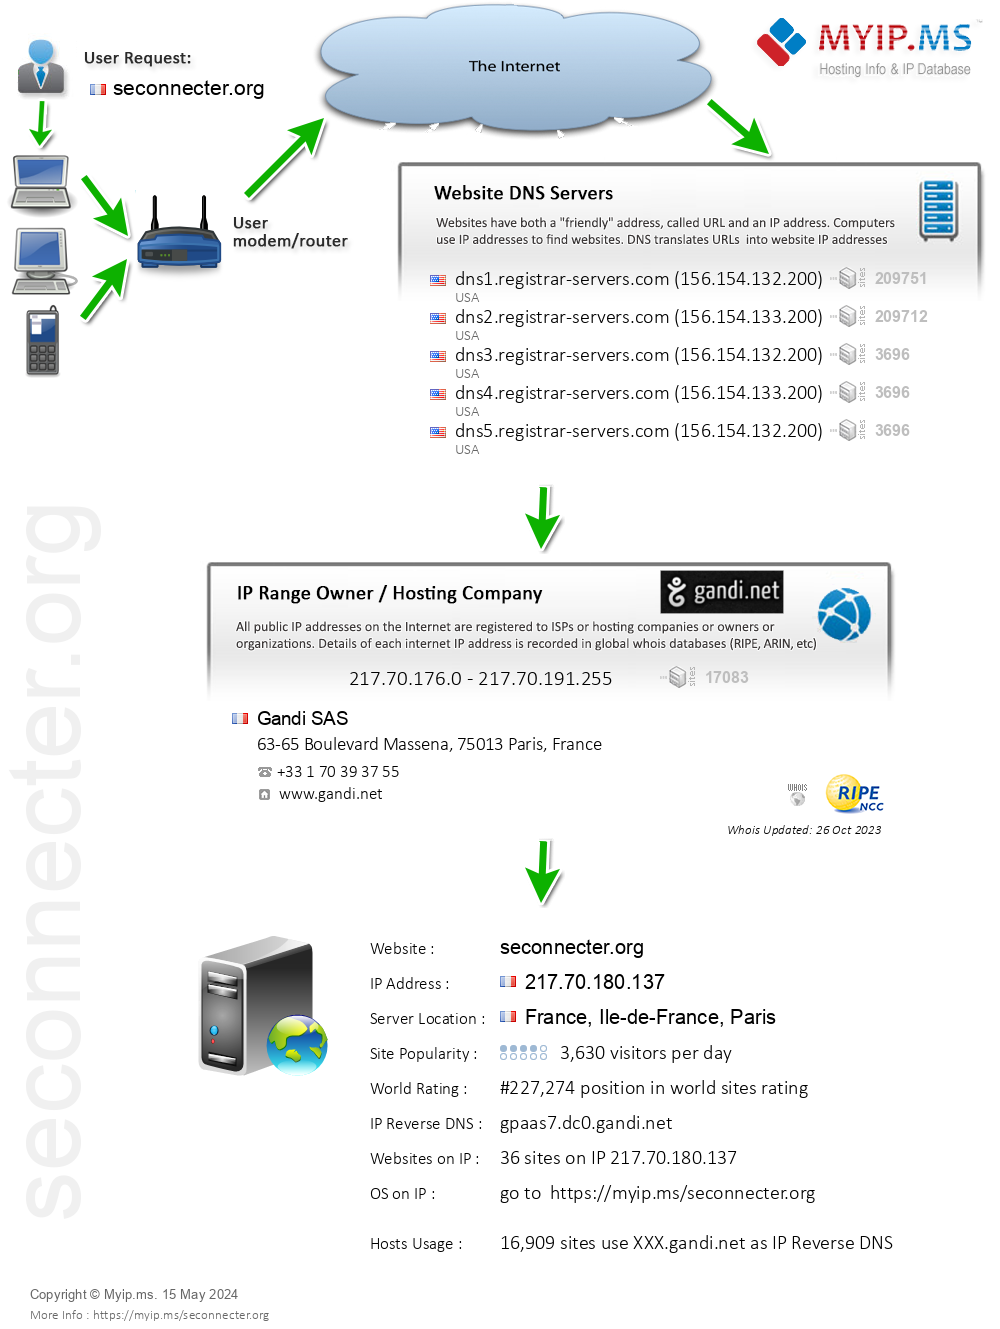 Seconnecter.org - Website Hosting Visual IP Diagram